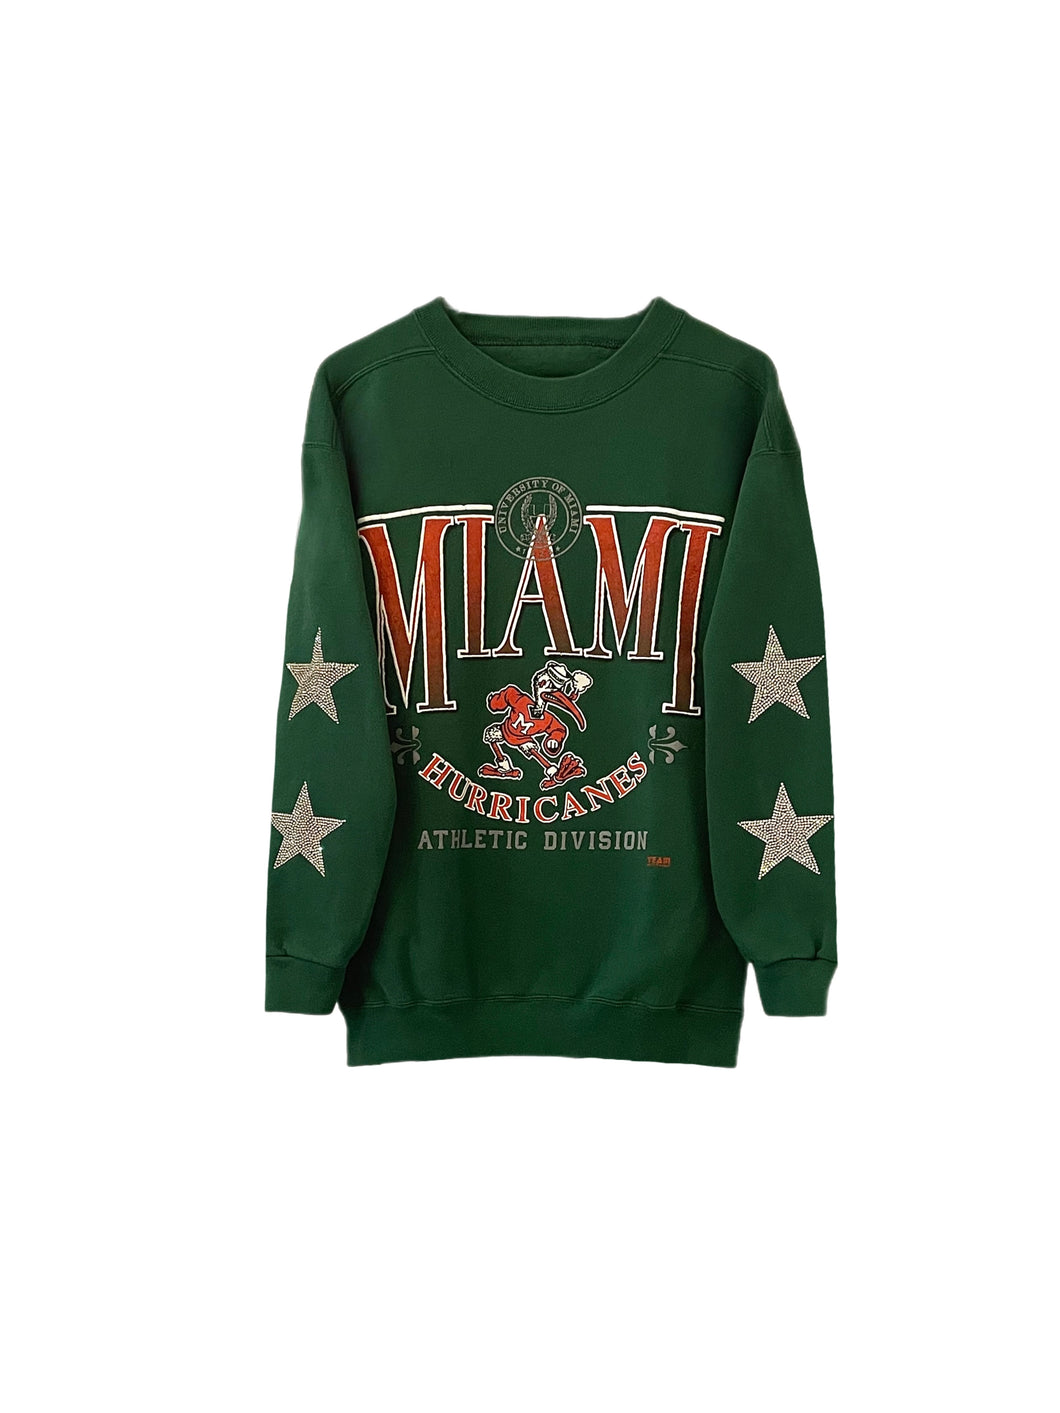 University of Miami, One of a KIND Vintage UM Sweatshirt with Crystal Star Design.